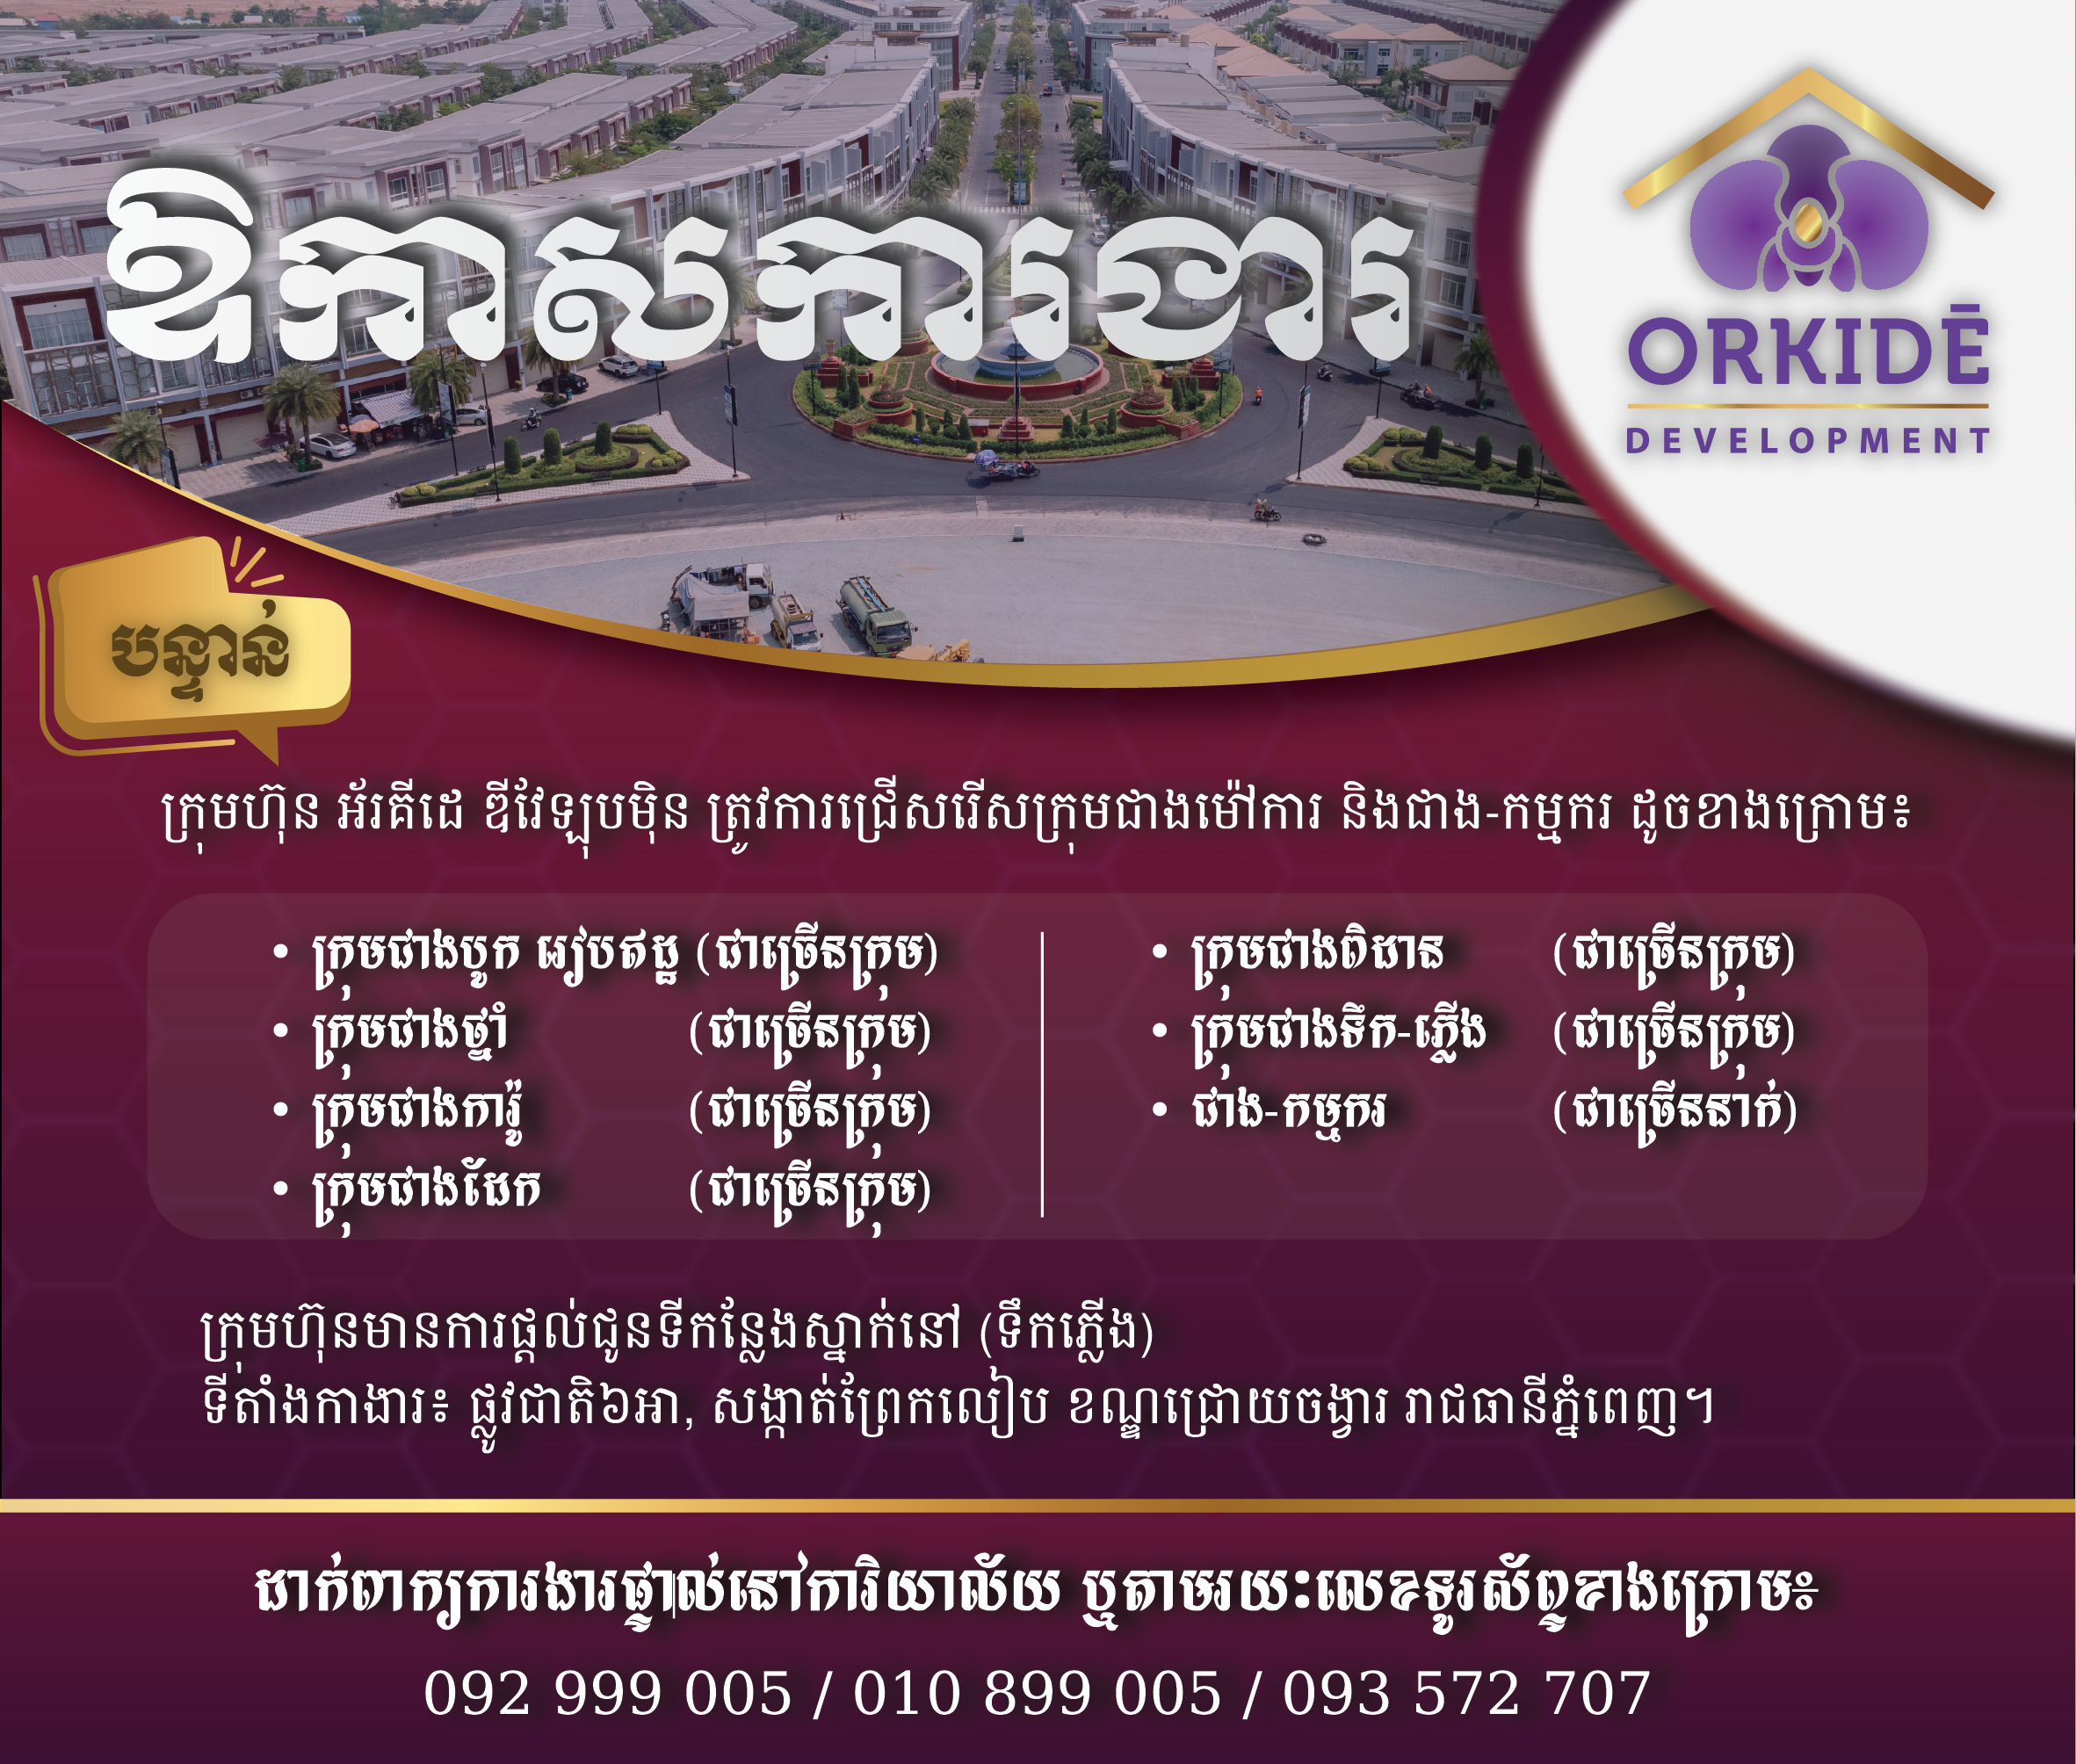 Orkide Real Estate Developer - Phnom Penh Cambodia